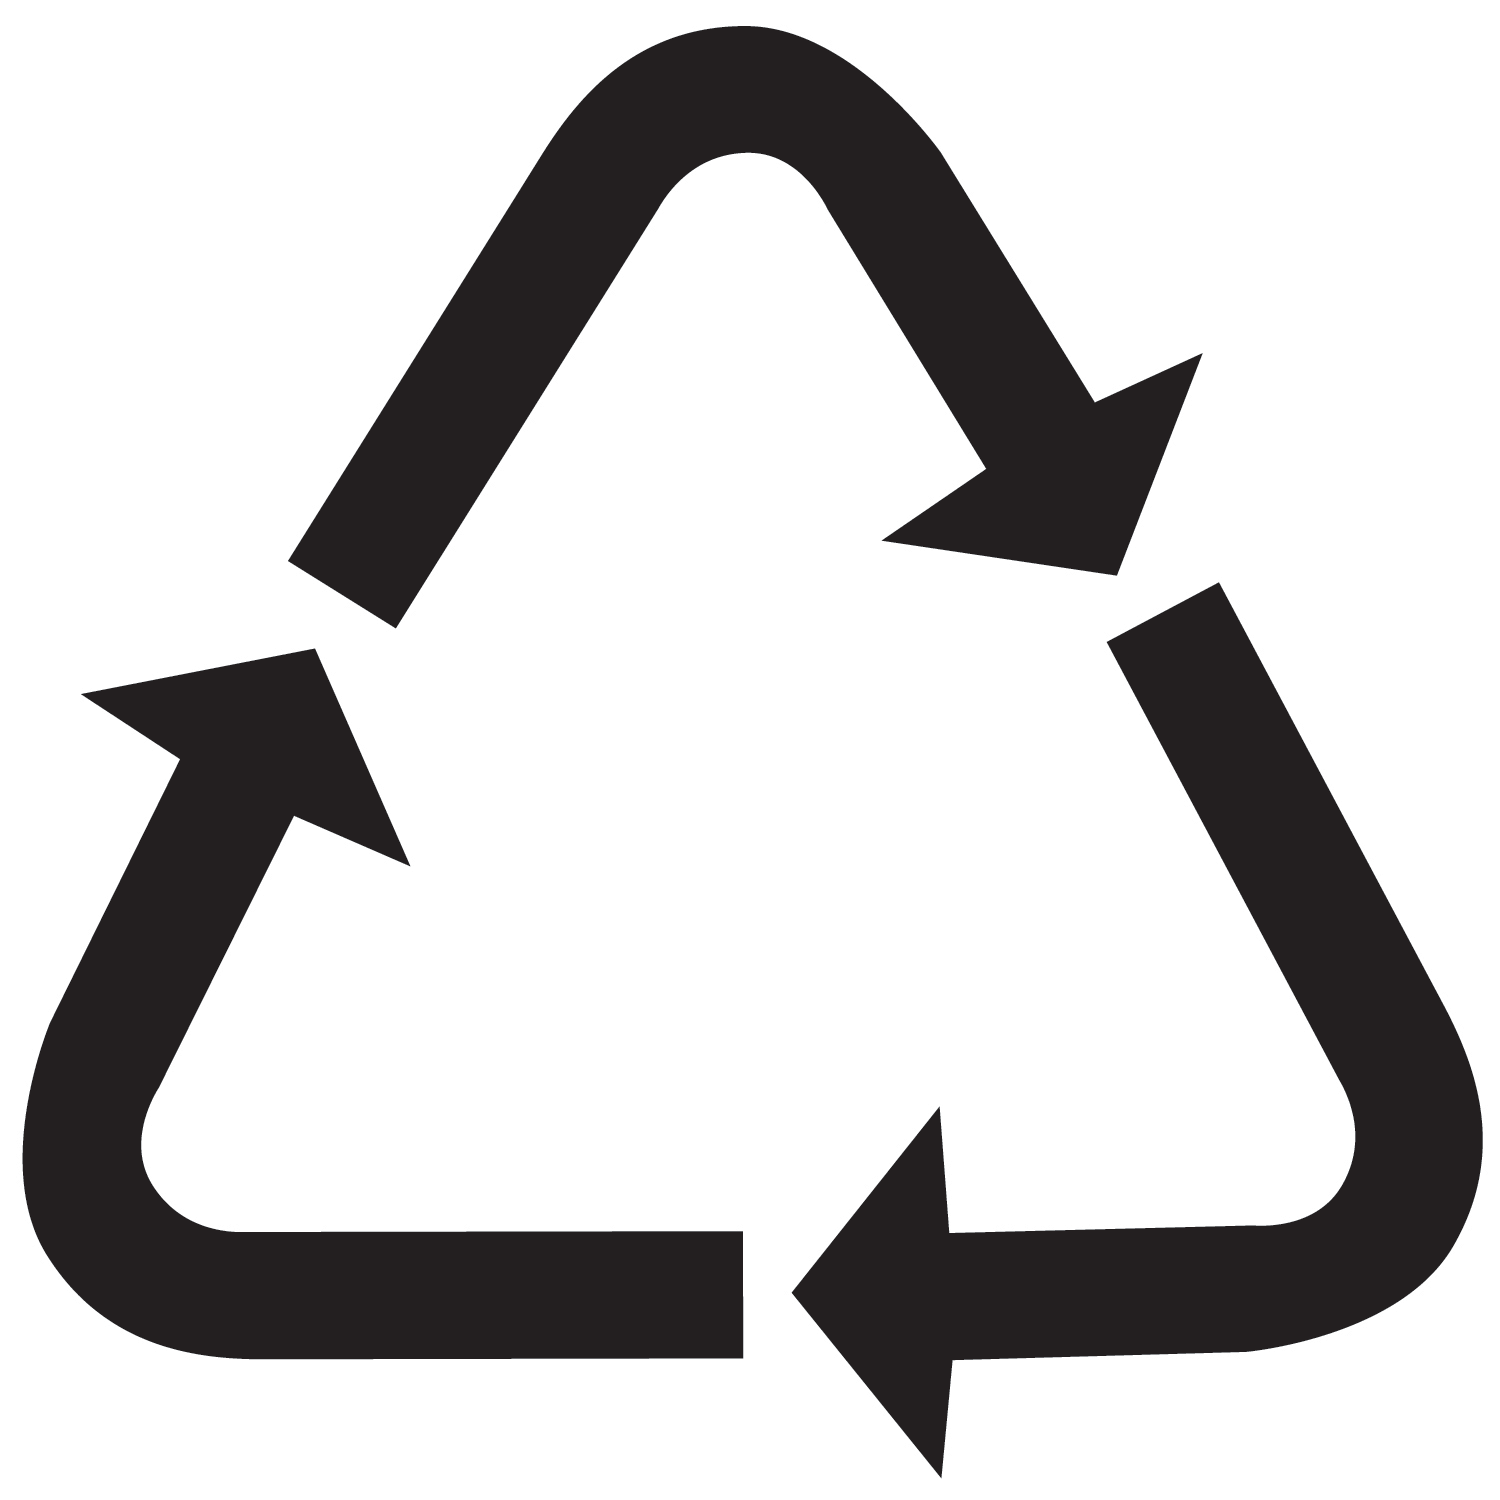 Recycling Symbols Printable